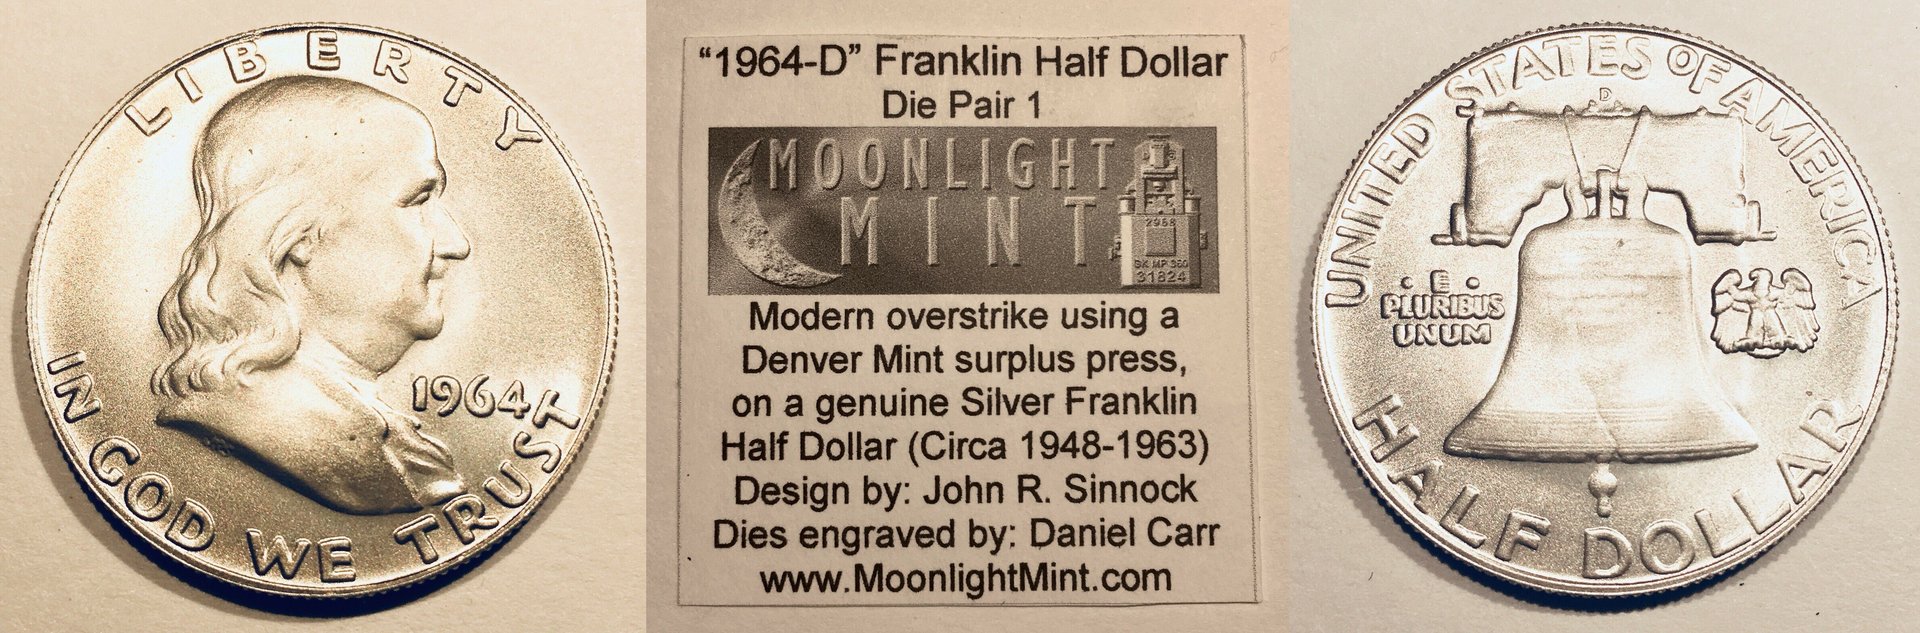 1964 Franklin Half Dollar - Daniel Carr D.jpg